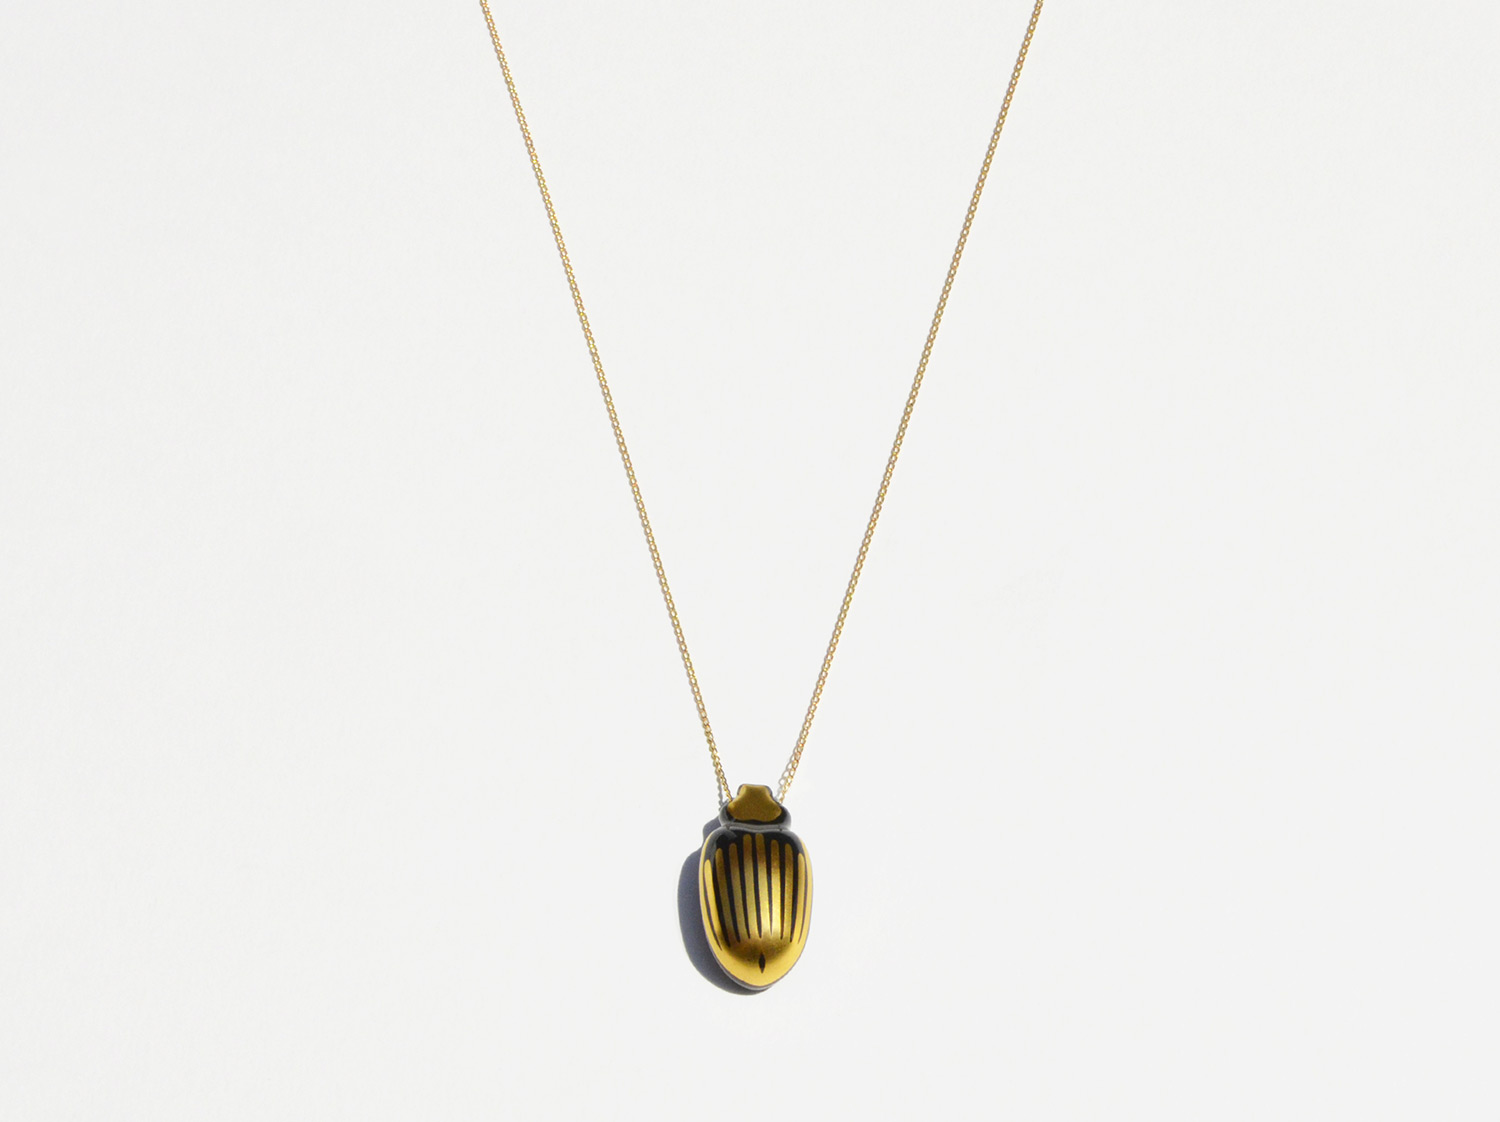 China Scarabée Pendant Black & Gold of the collection SCARABEE NOIR OR | Bernardaud